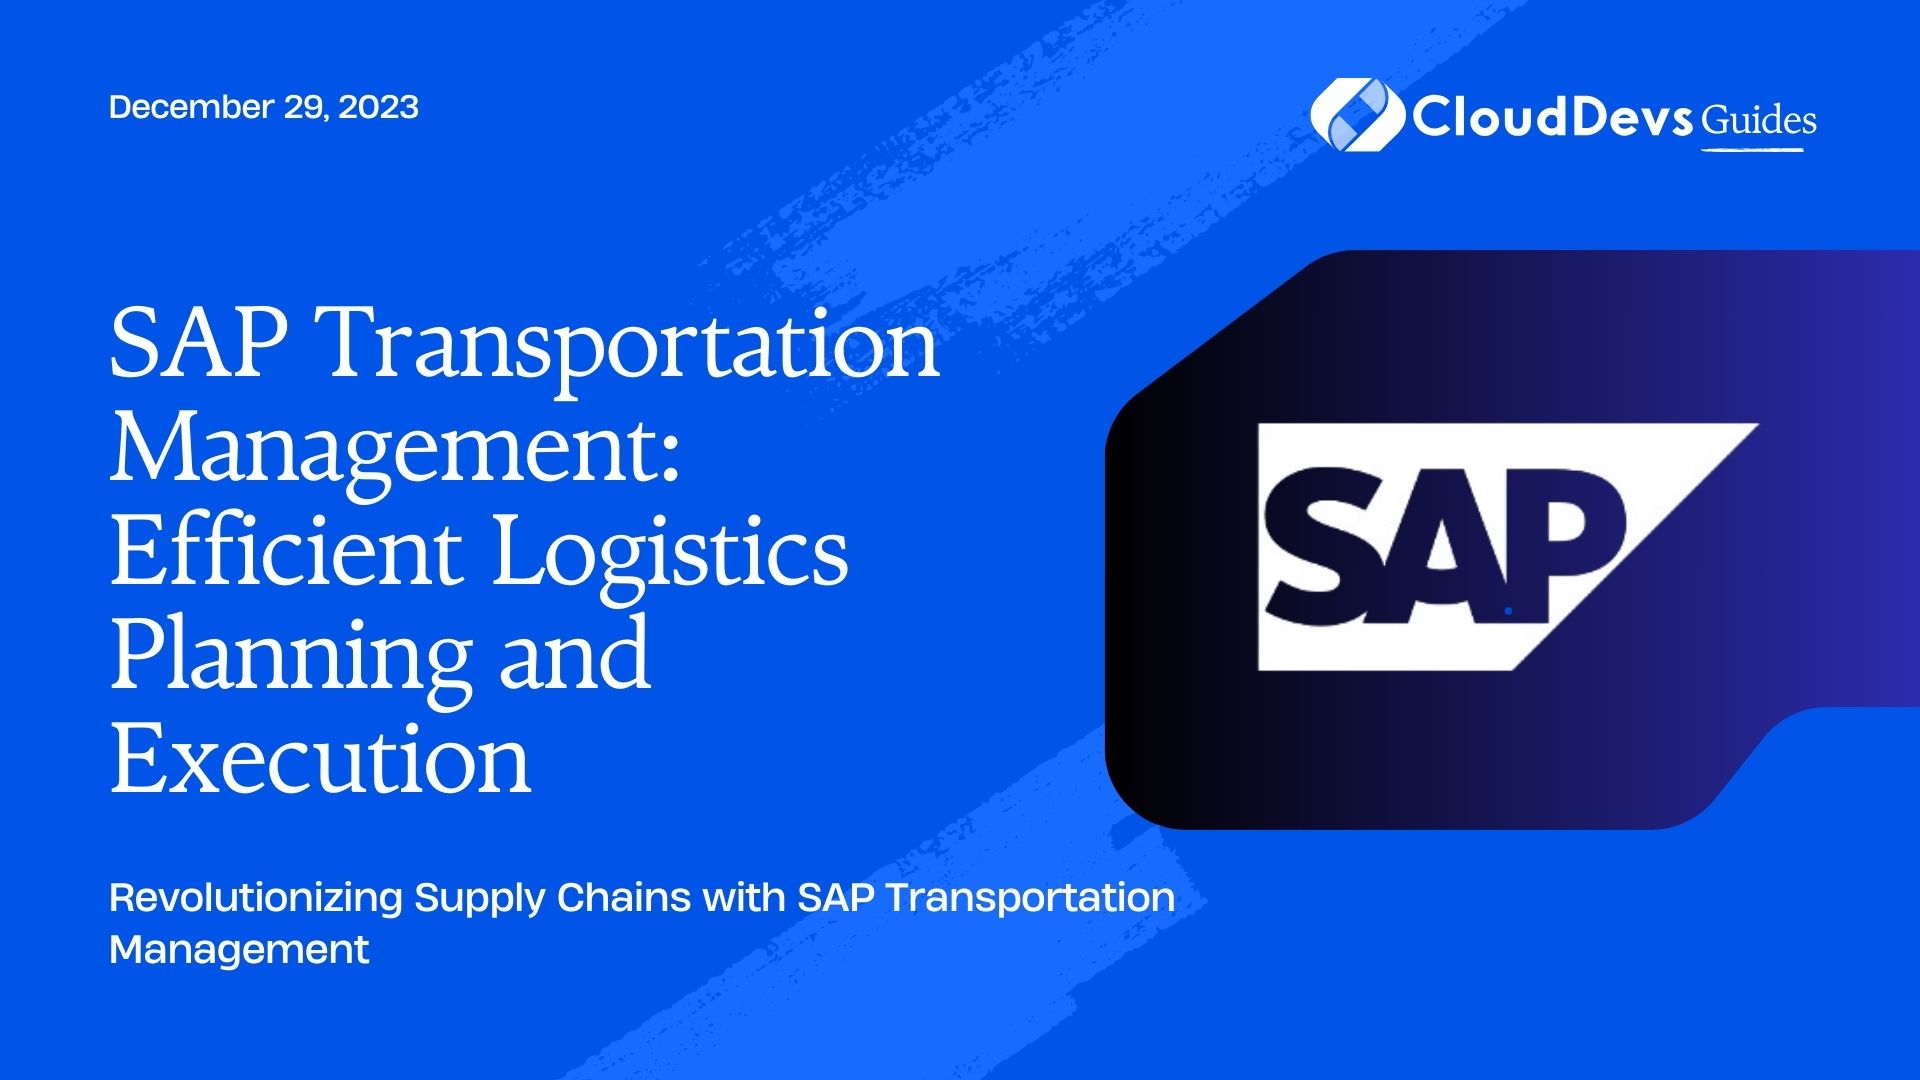 SAP Transportation Management: Efficient Logistics Planning and Execution